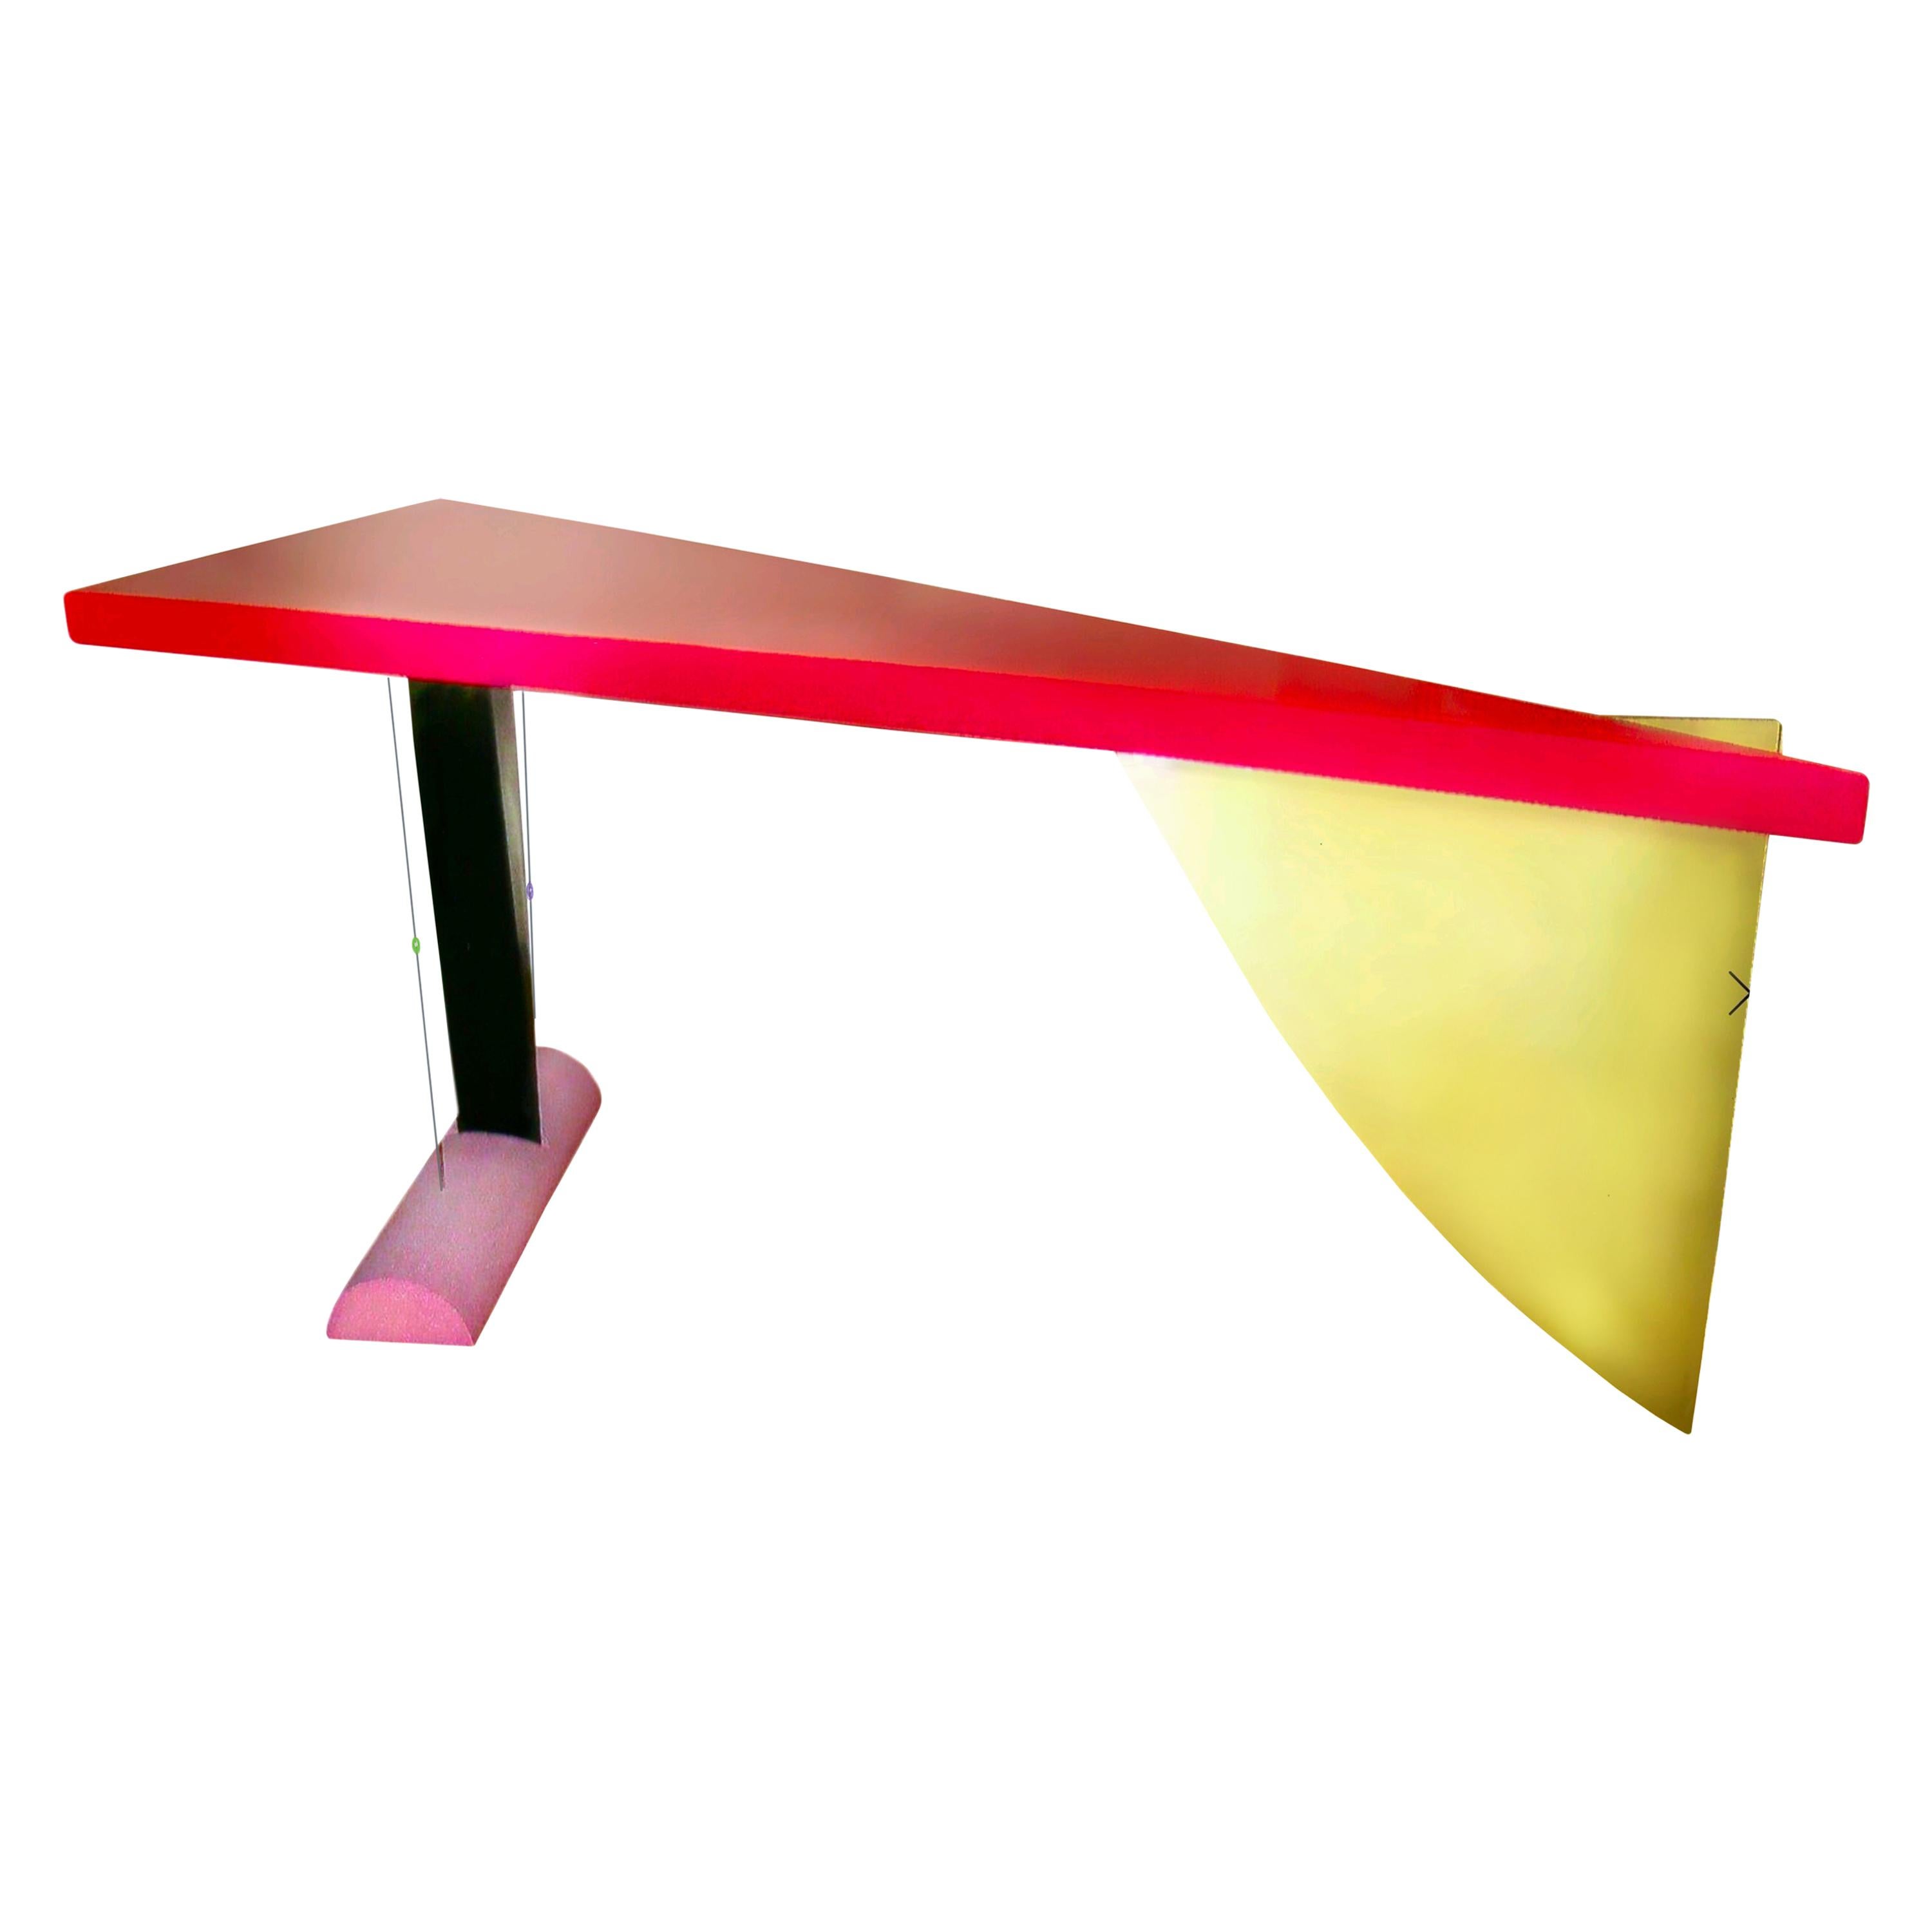 Peter Shire Prototype Brazilia Table, Shire Studio, Memphis Group, Red Gold 1980